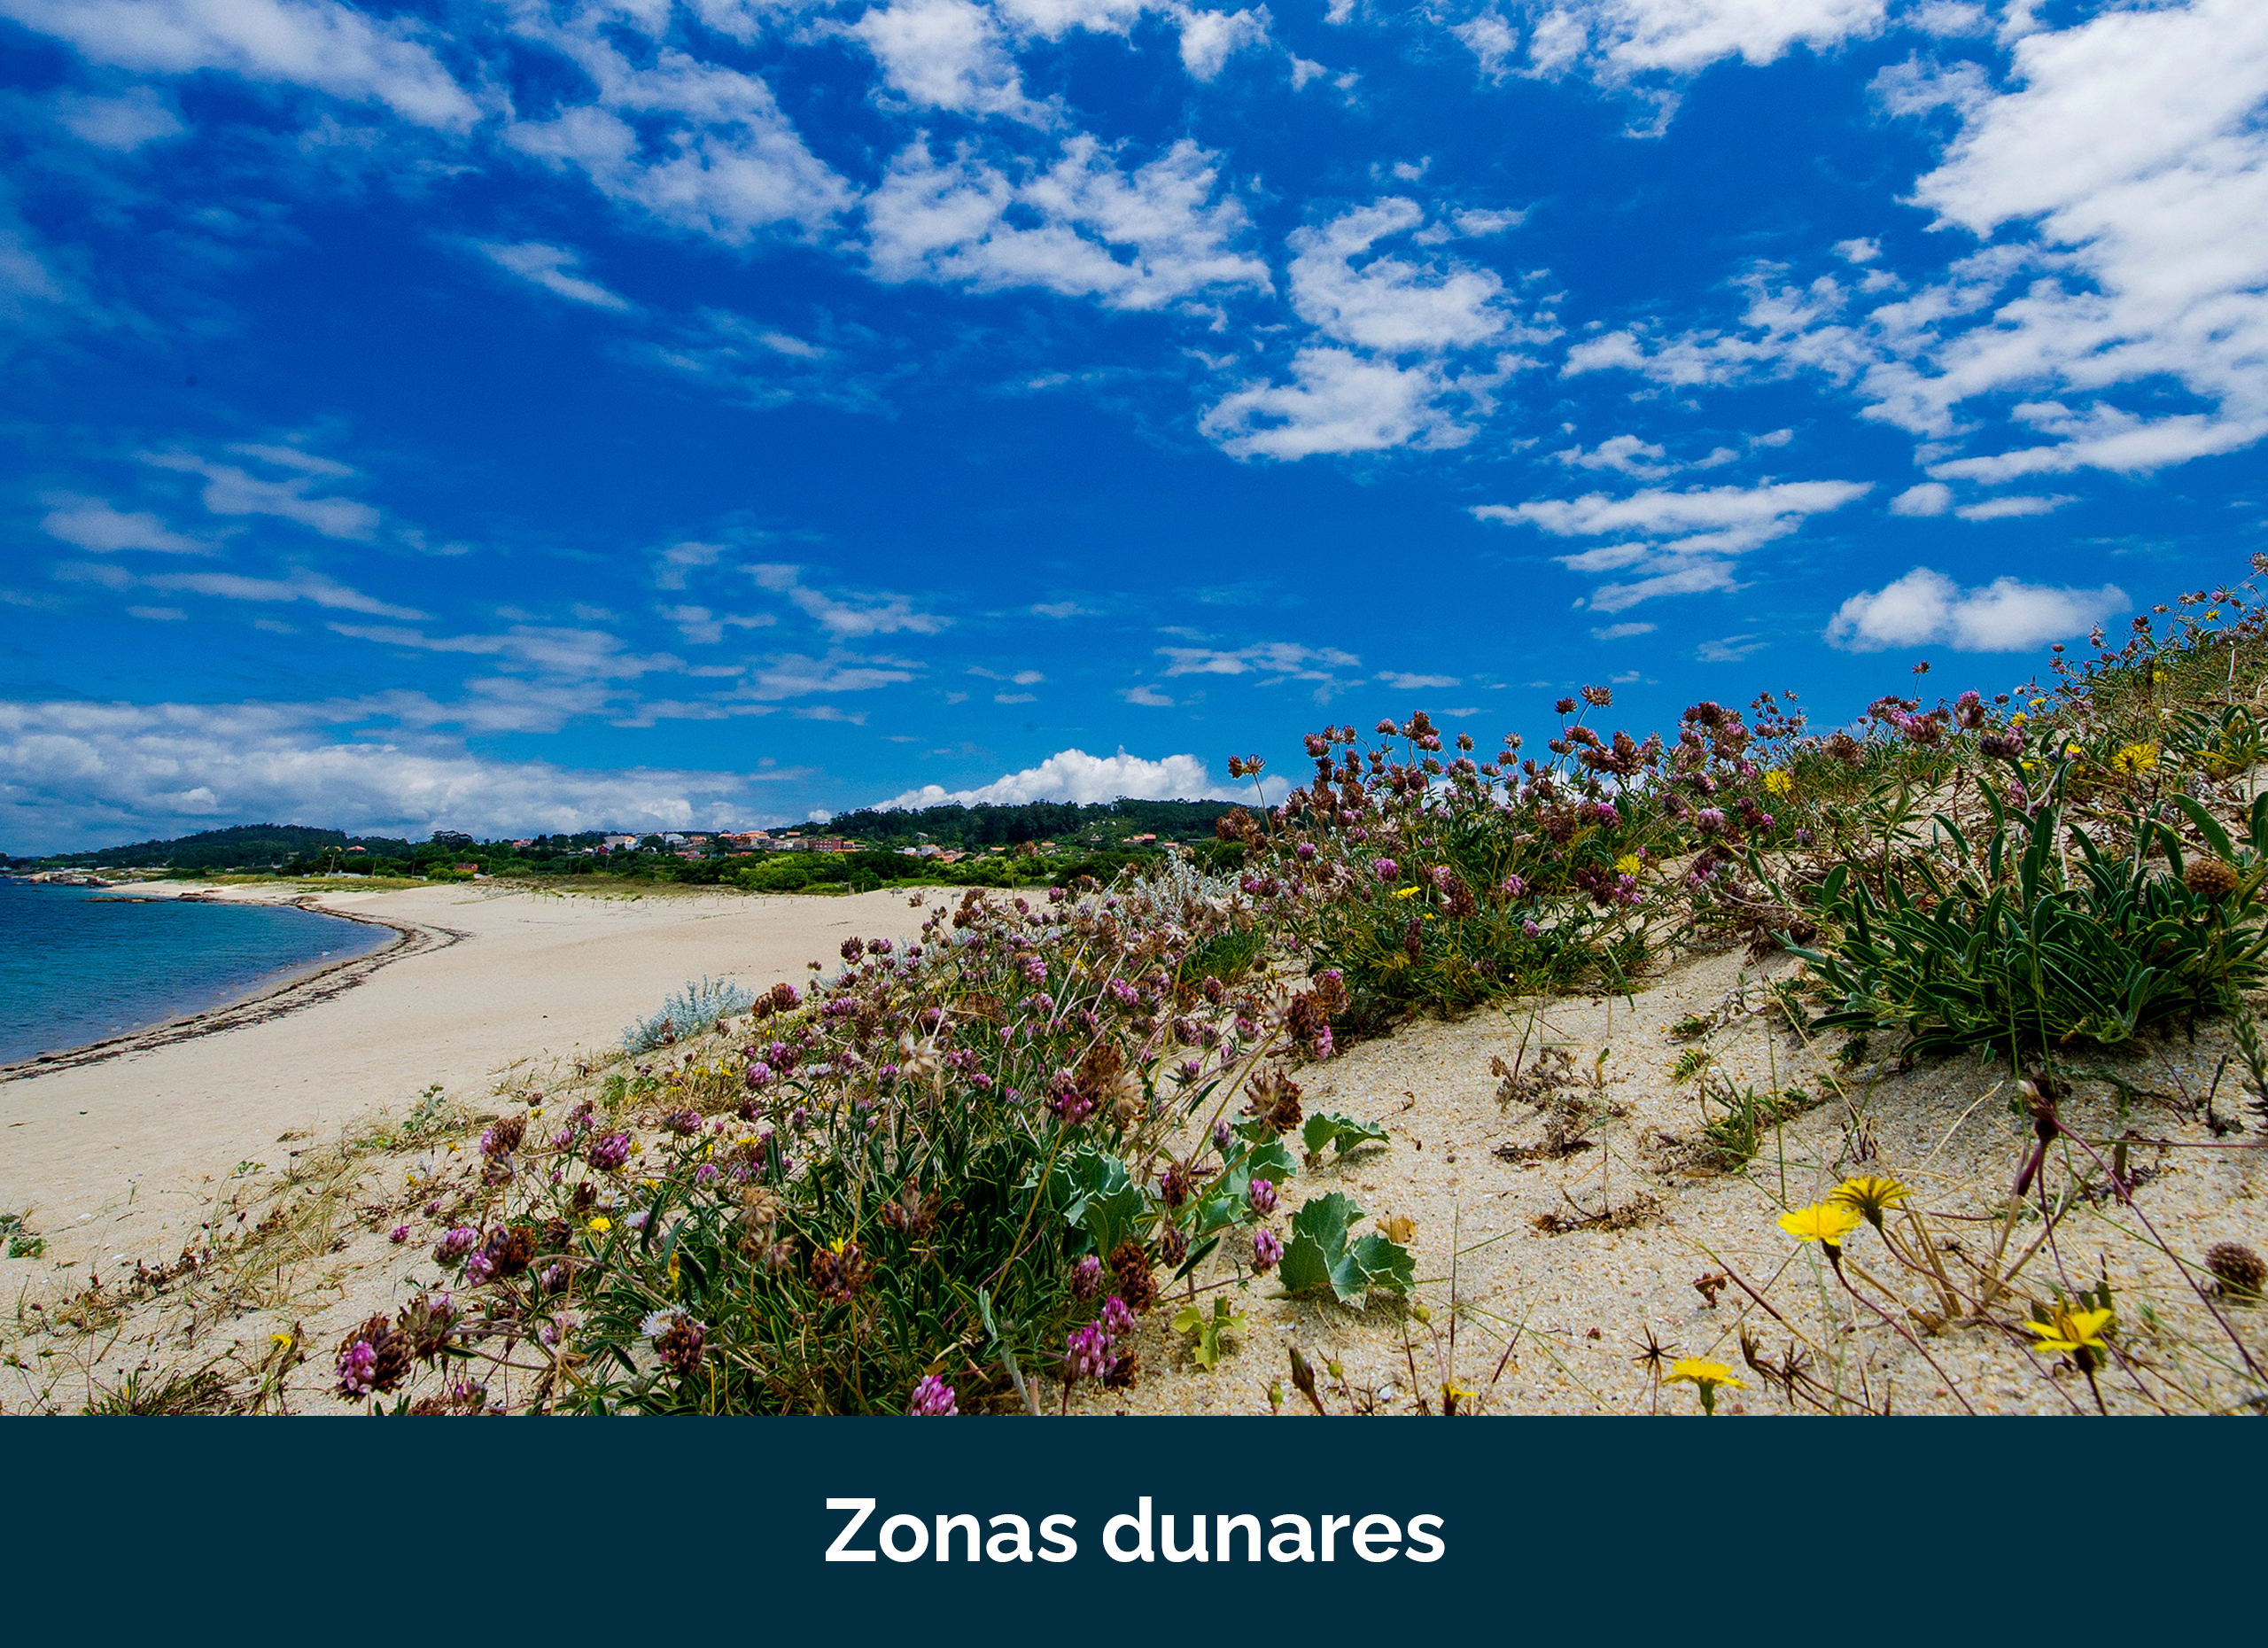 Zonas dunares